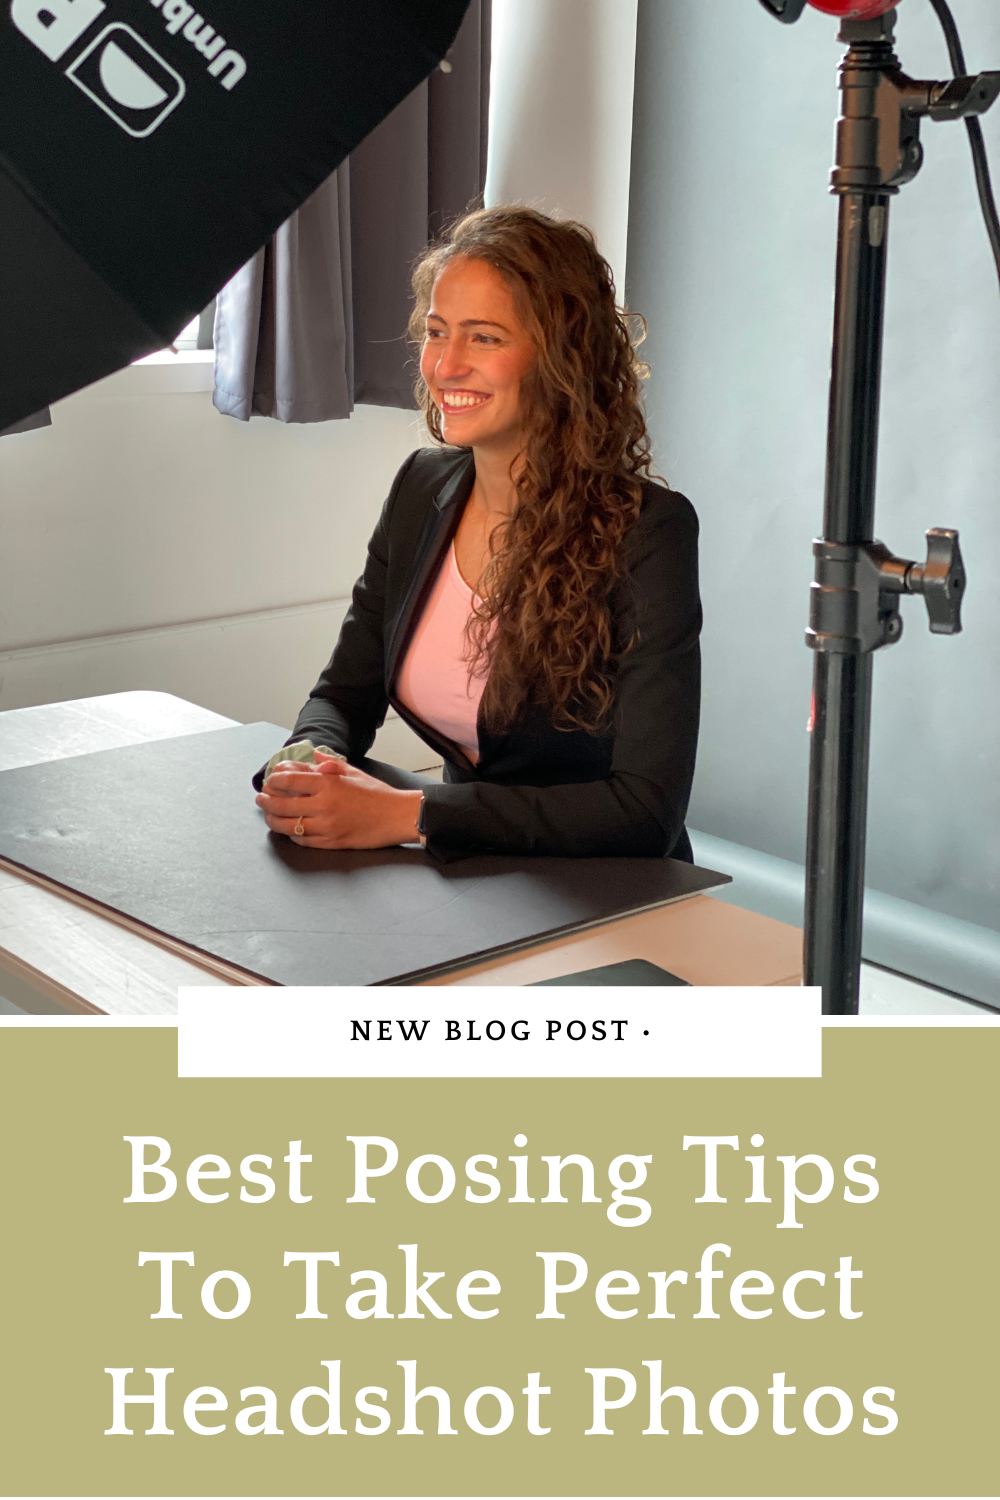 20 Posing Tips For Headshot Photos.JPG